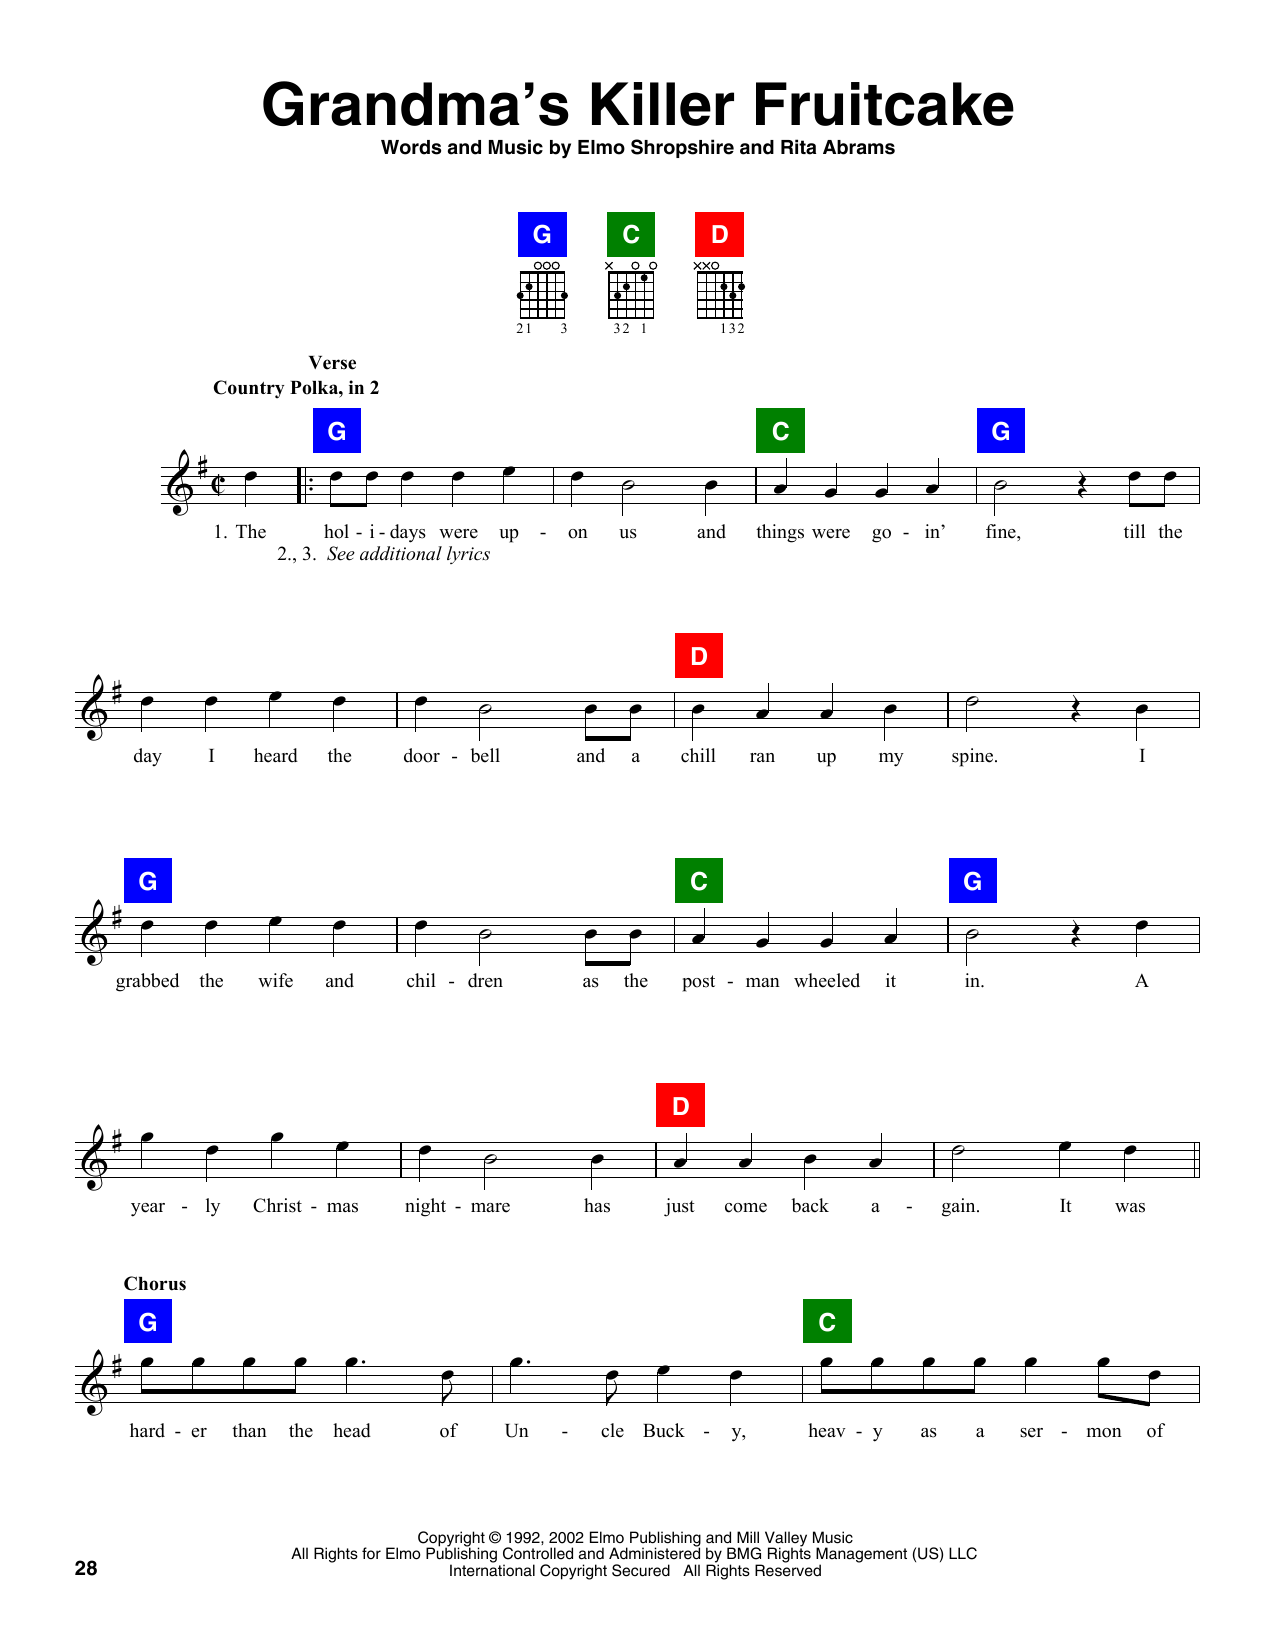 Elmo Shropshire Grandma's Killer Fruitcake Sheet Music Notes & Chords for Violin - Download or Print PDF